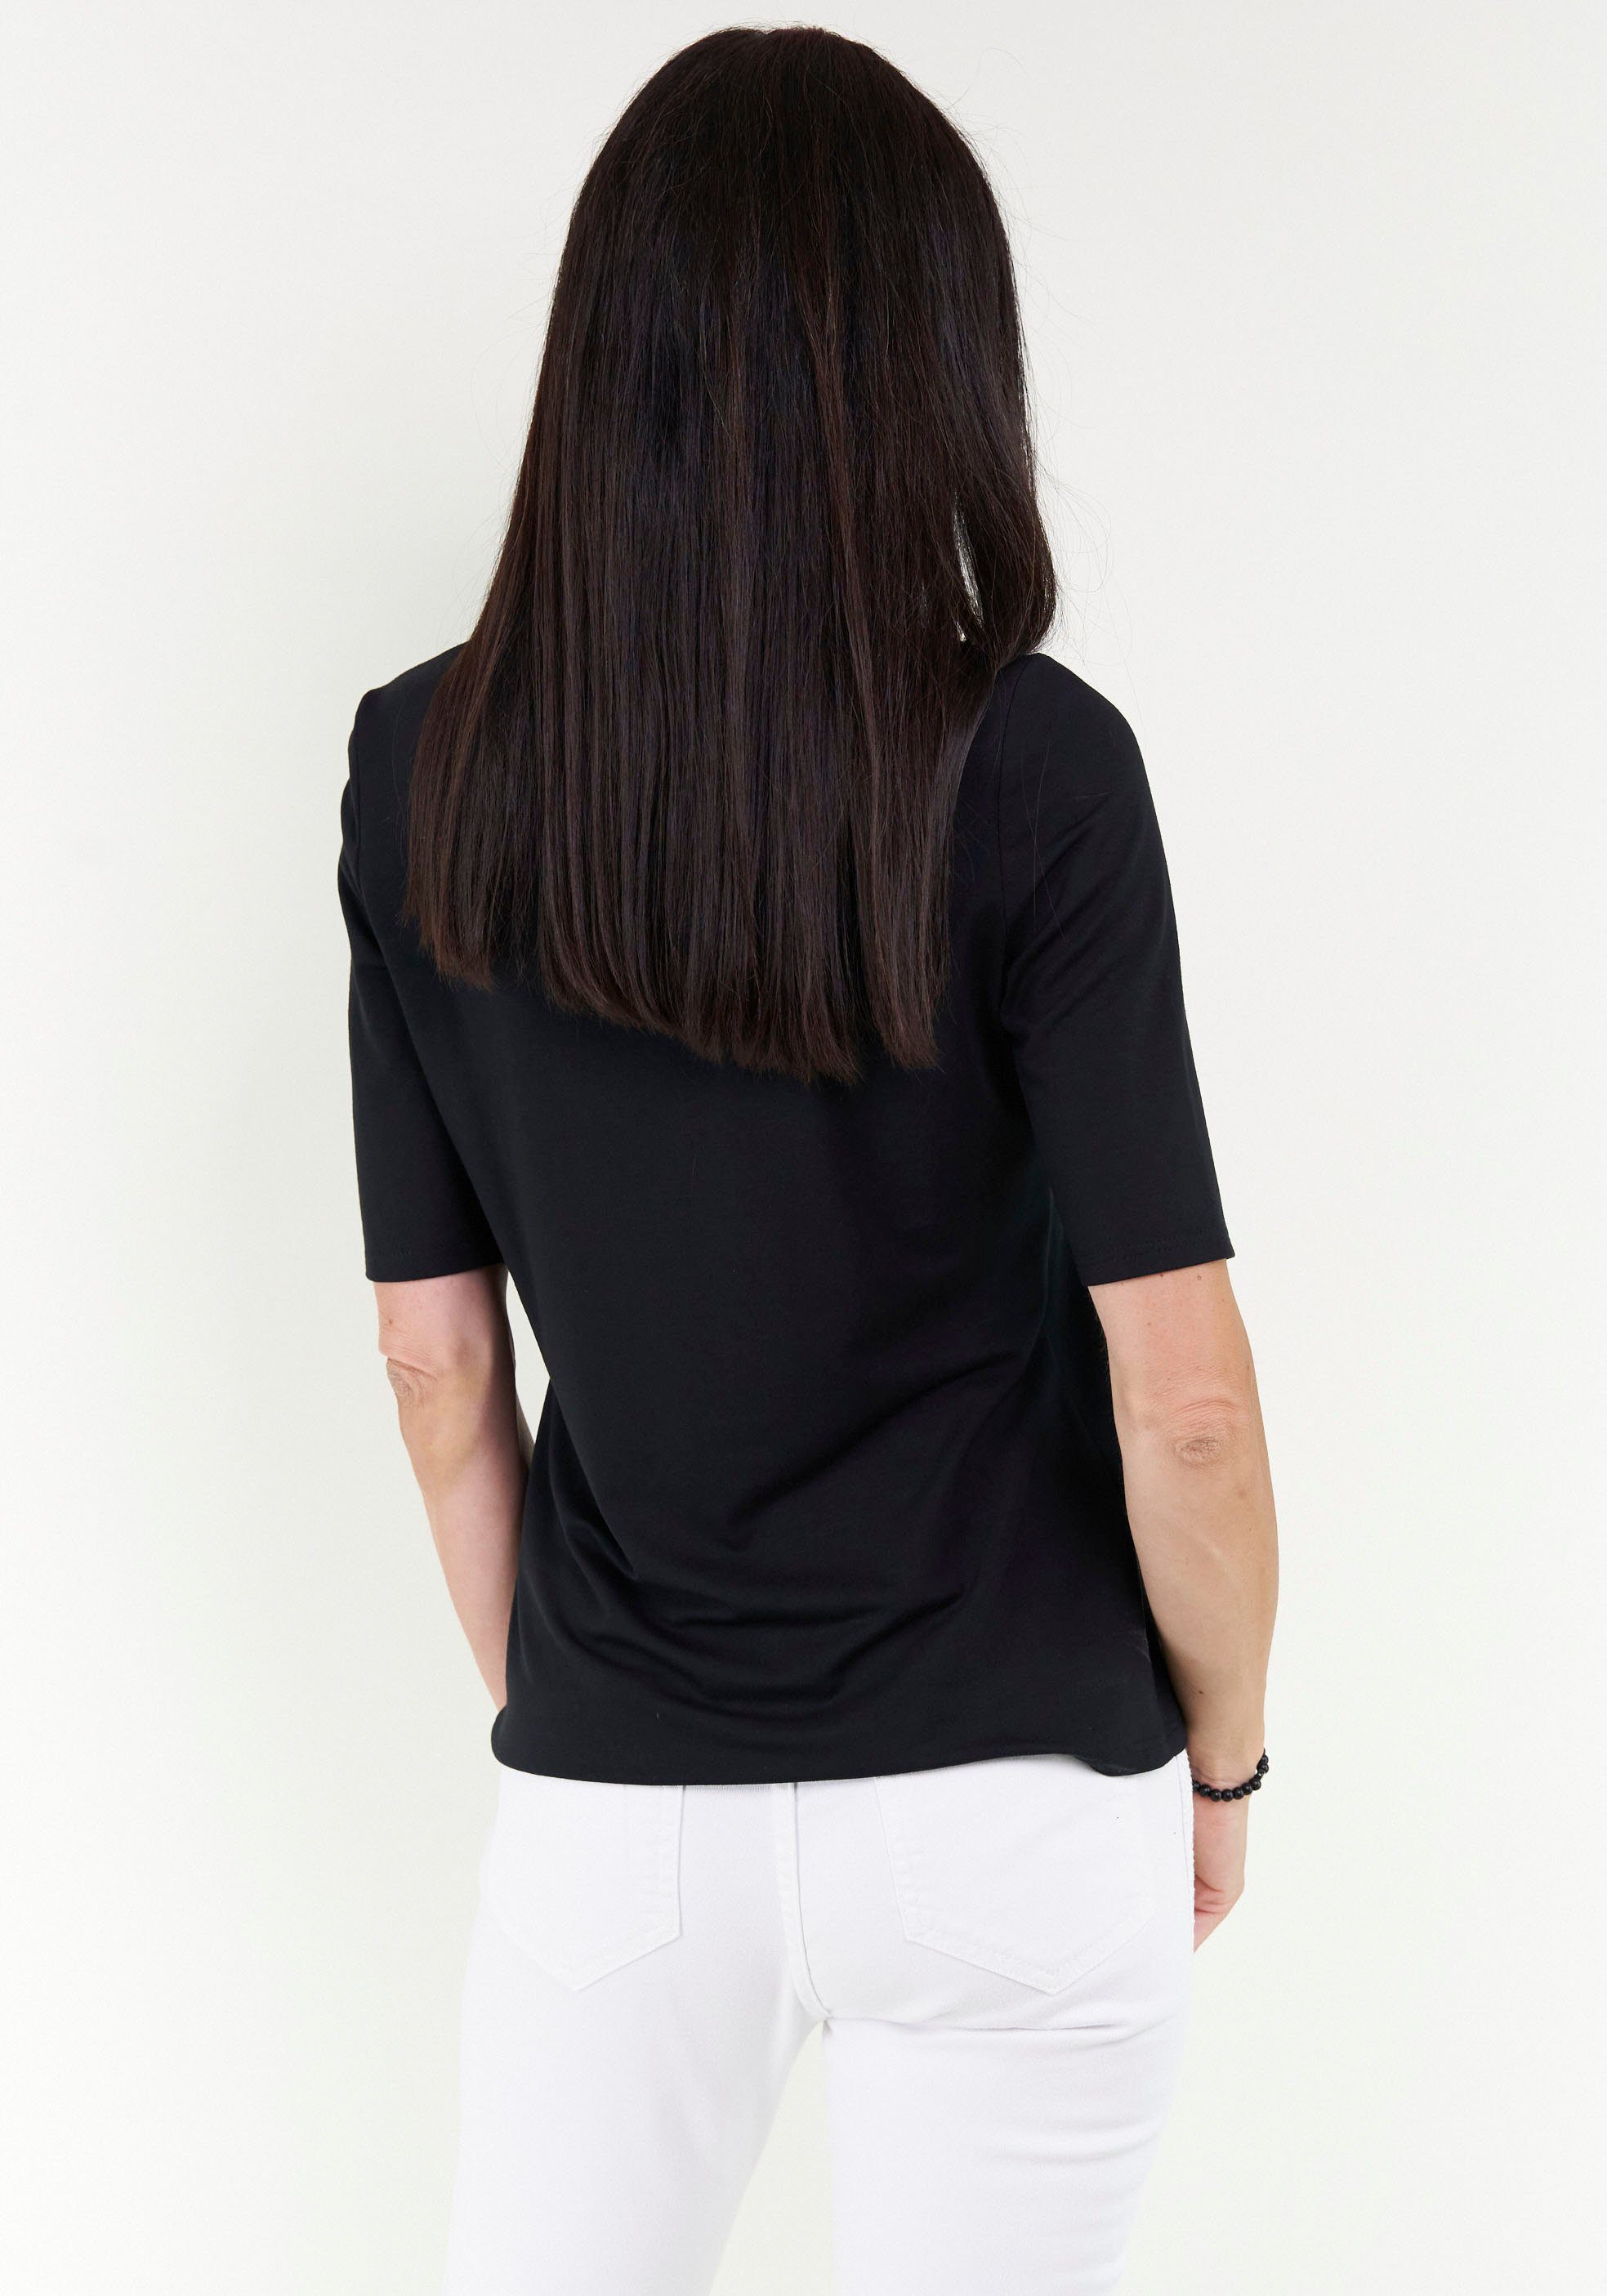 Moden softem V-Shirt Halbarm MADE GERMANY Seidel Material, aus schwarz mit IN